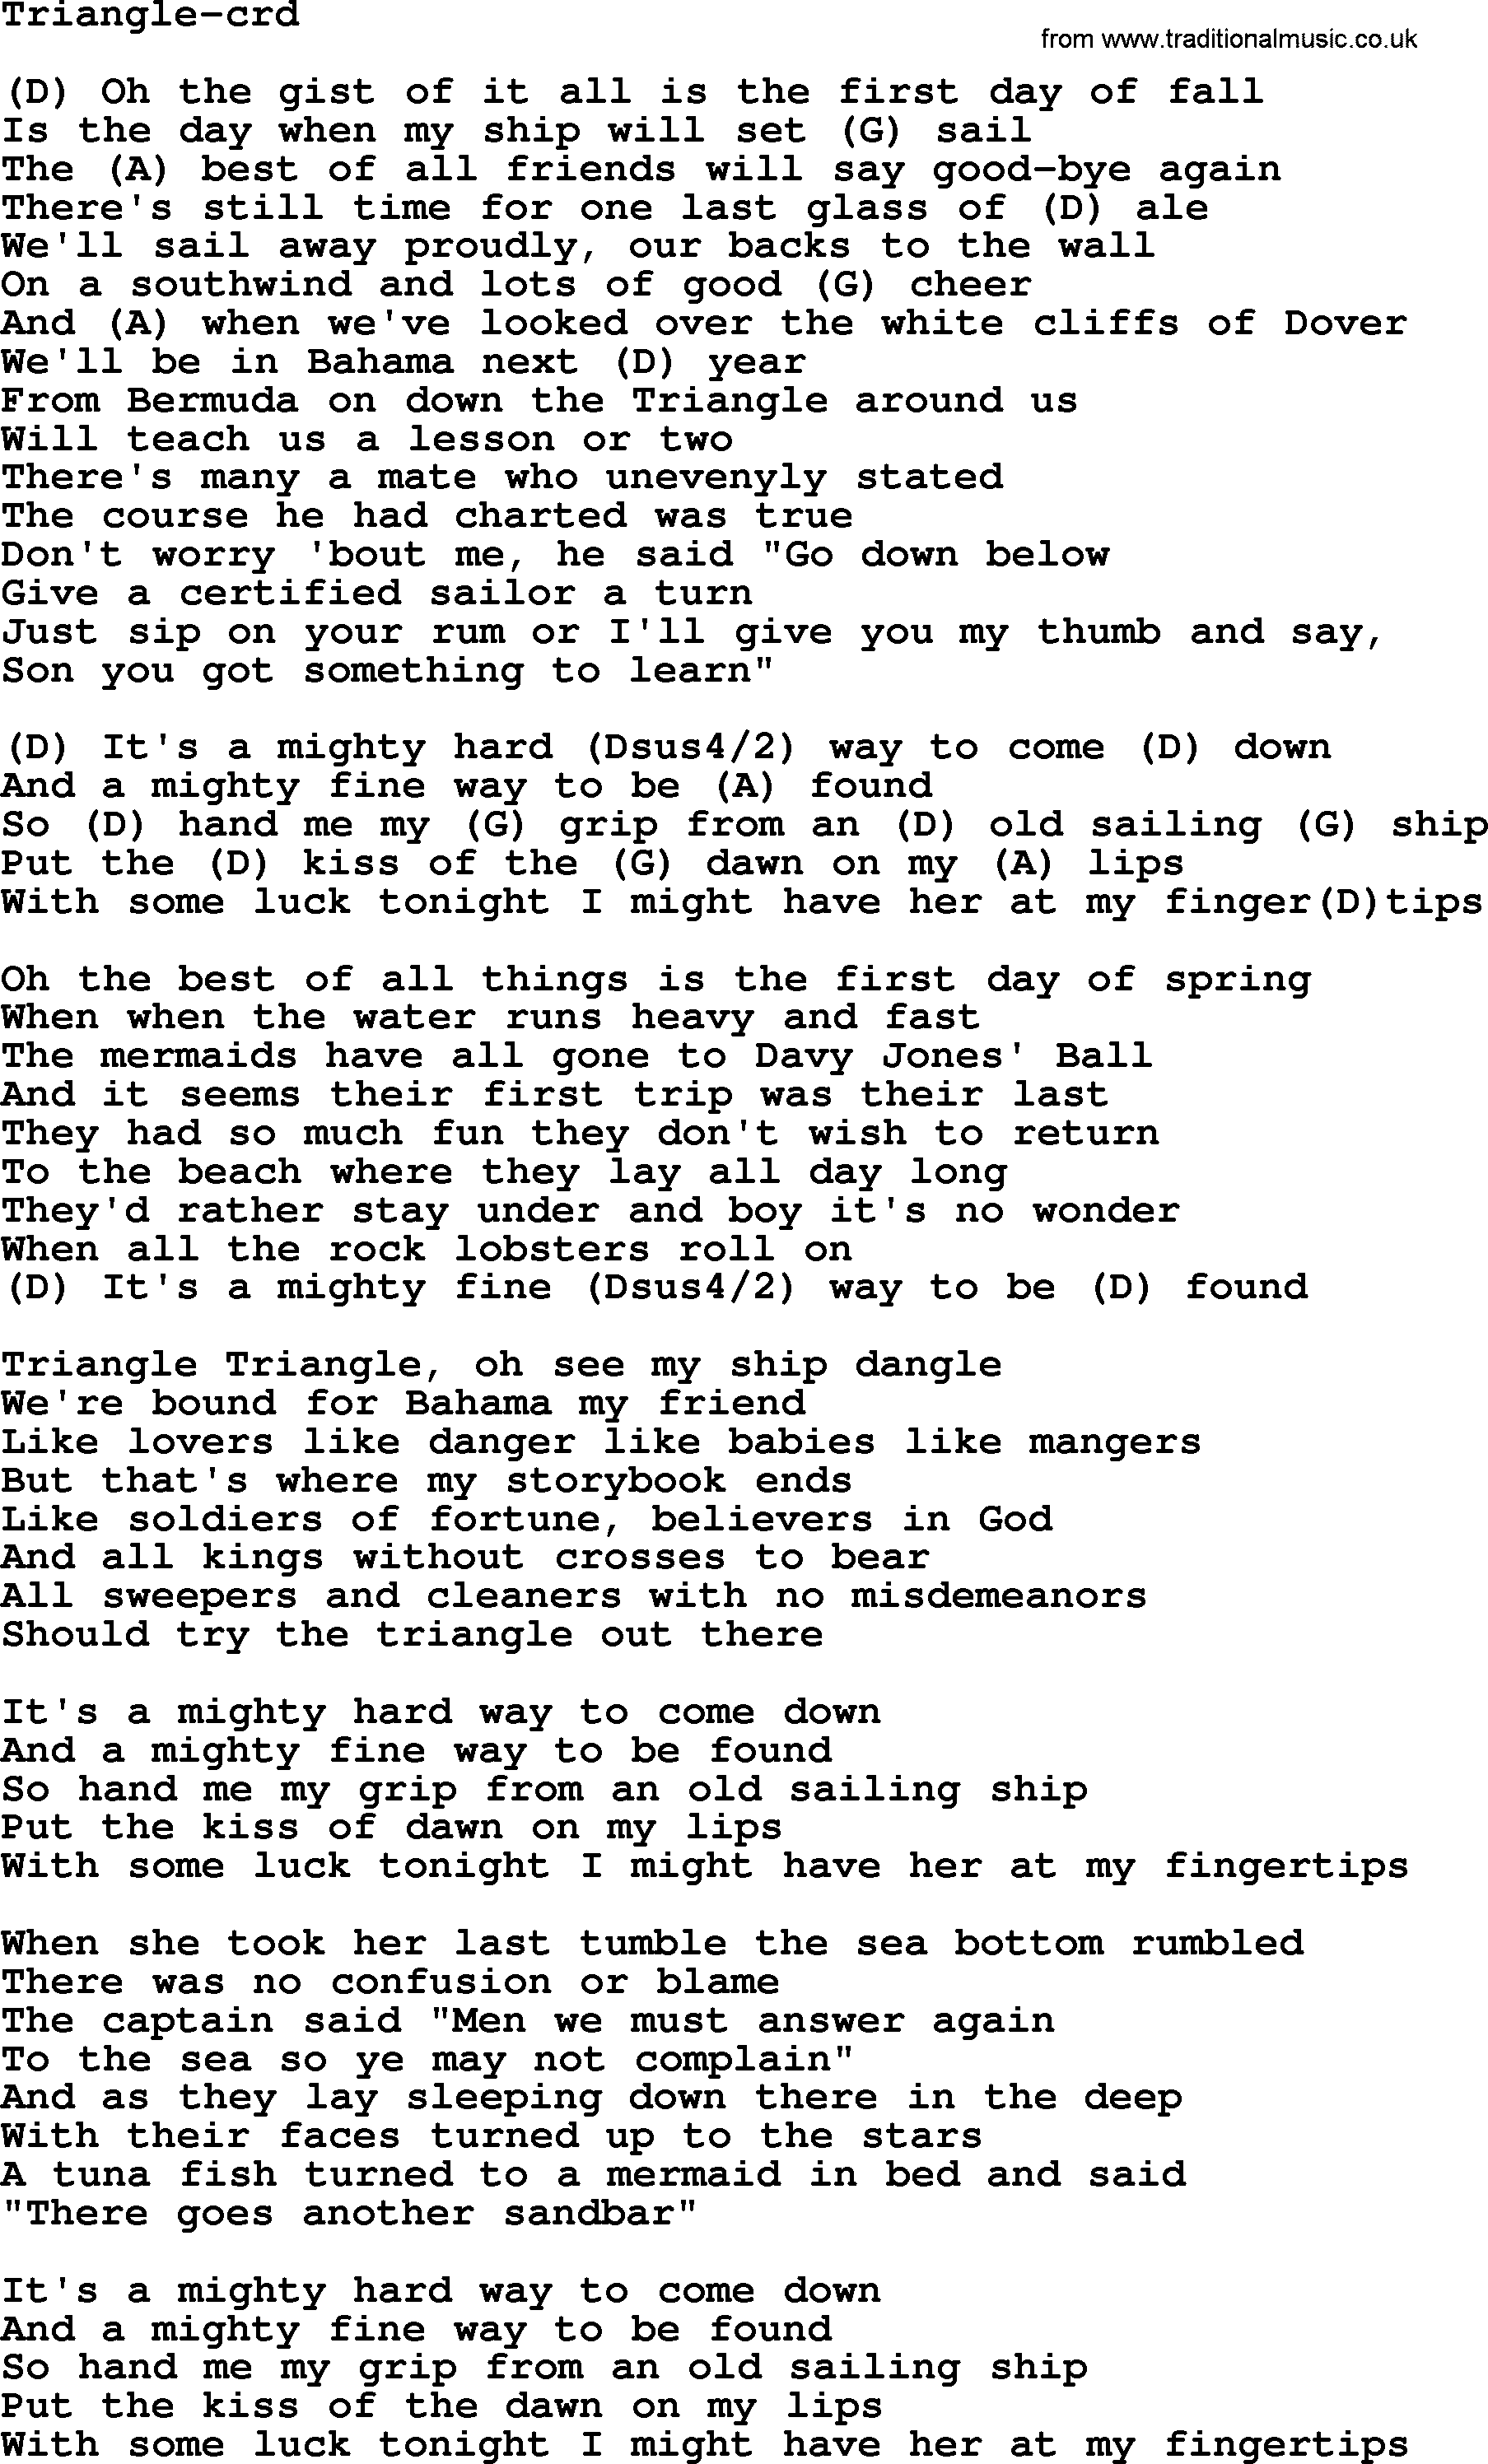 Gordon Lightfoot song Triangle, lyrics and chords